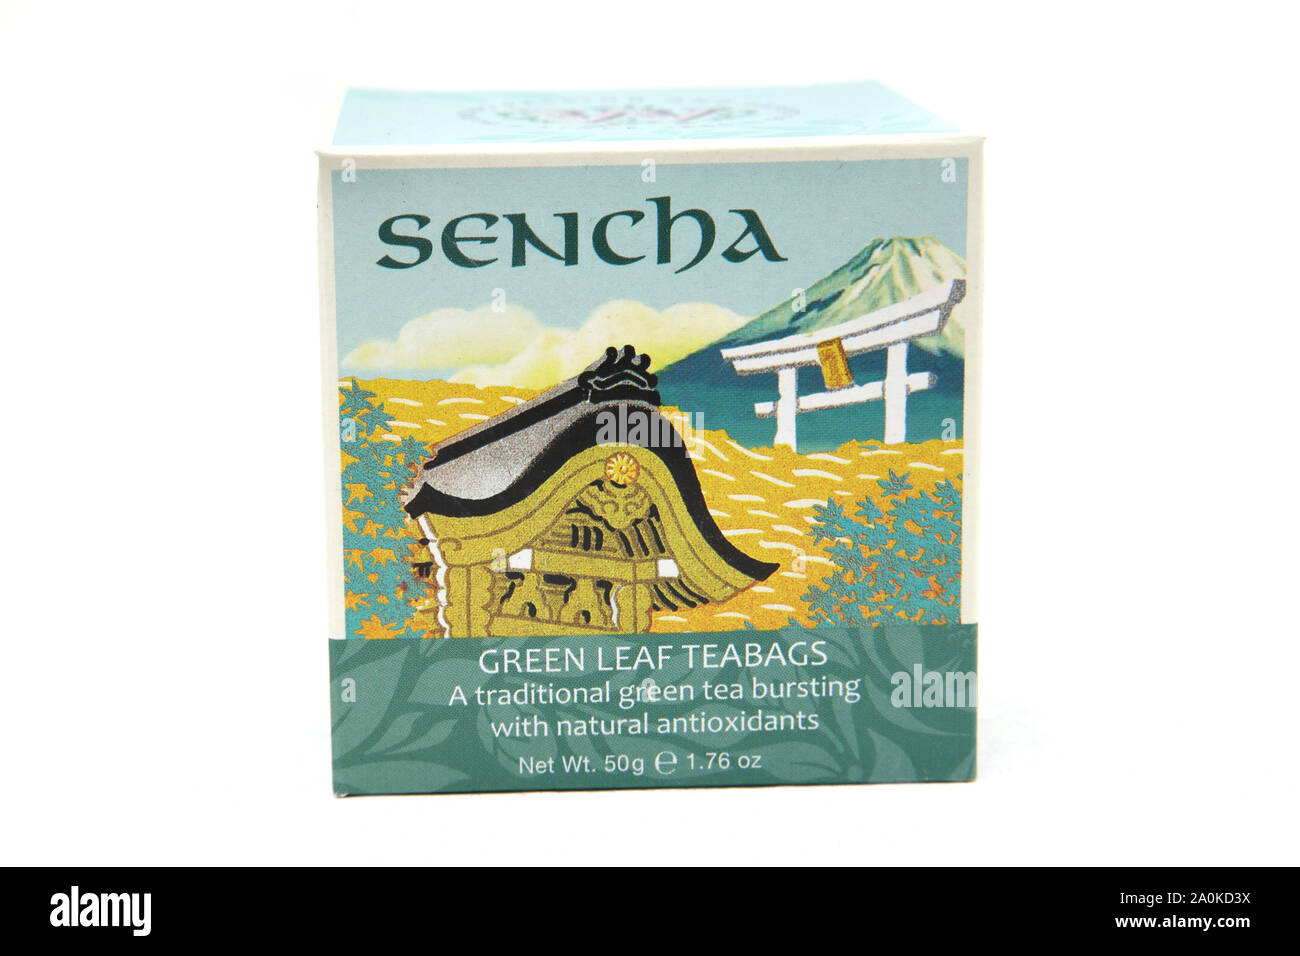 https://c8.alamy.com/comp/2A0KD3X/box-of-sencha-green-tea-by-whittards-of-chelsea-2A0KD3X.jpg